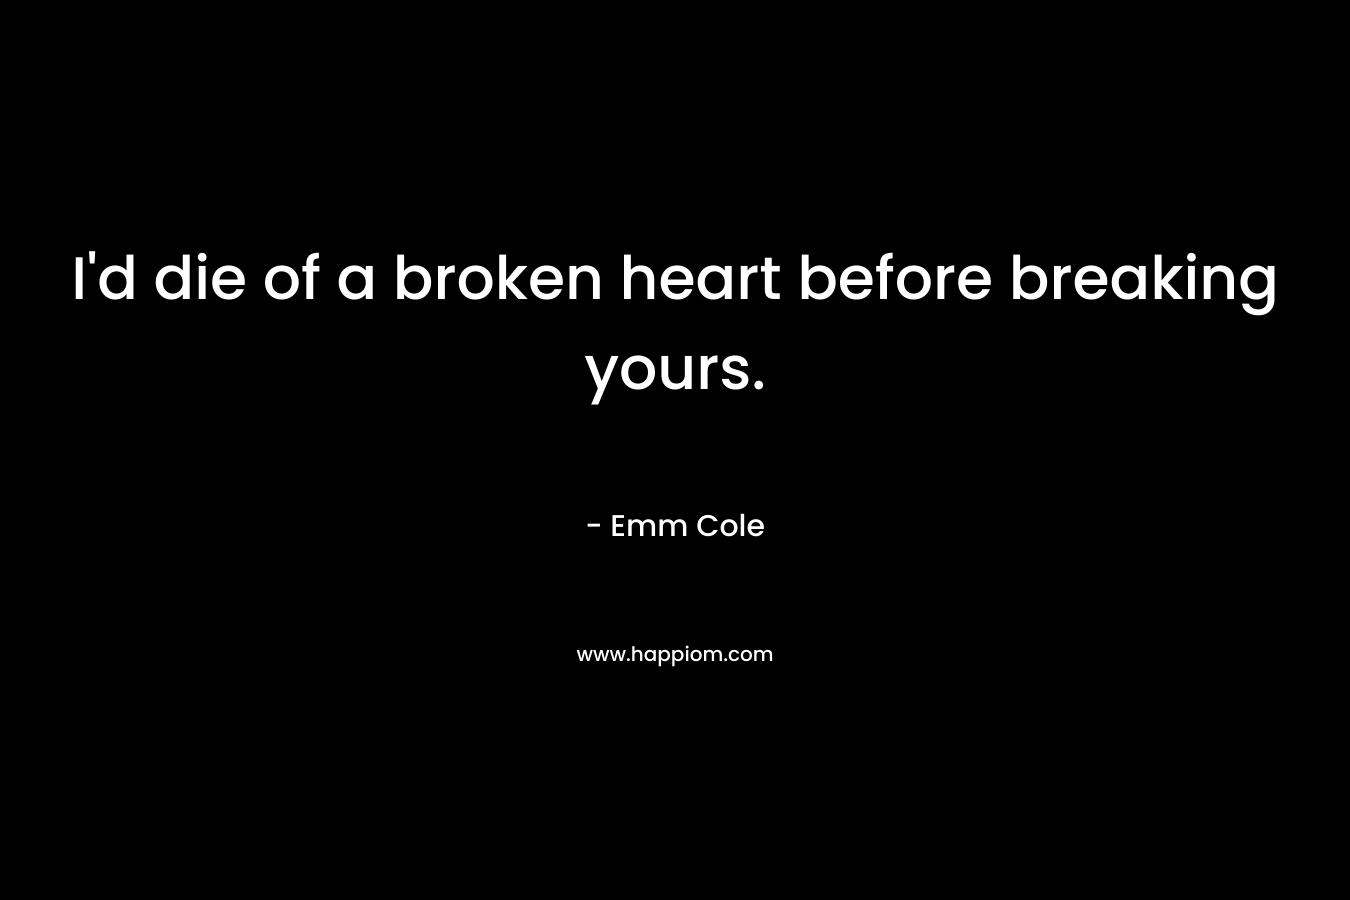 I'd die of a broken heart before breaking yours.